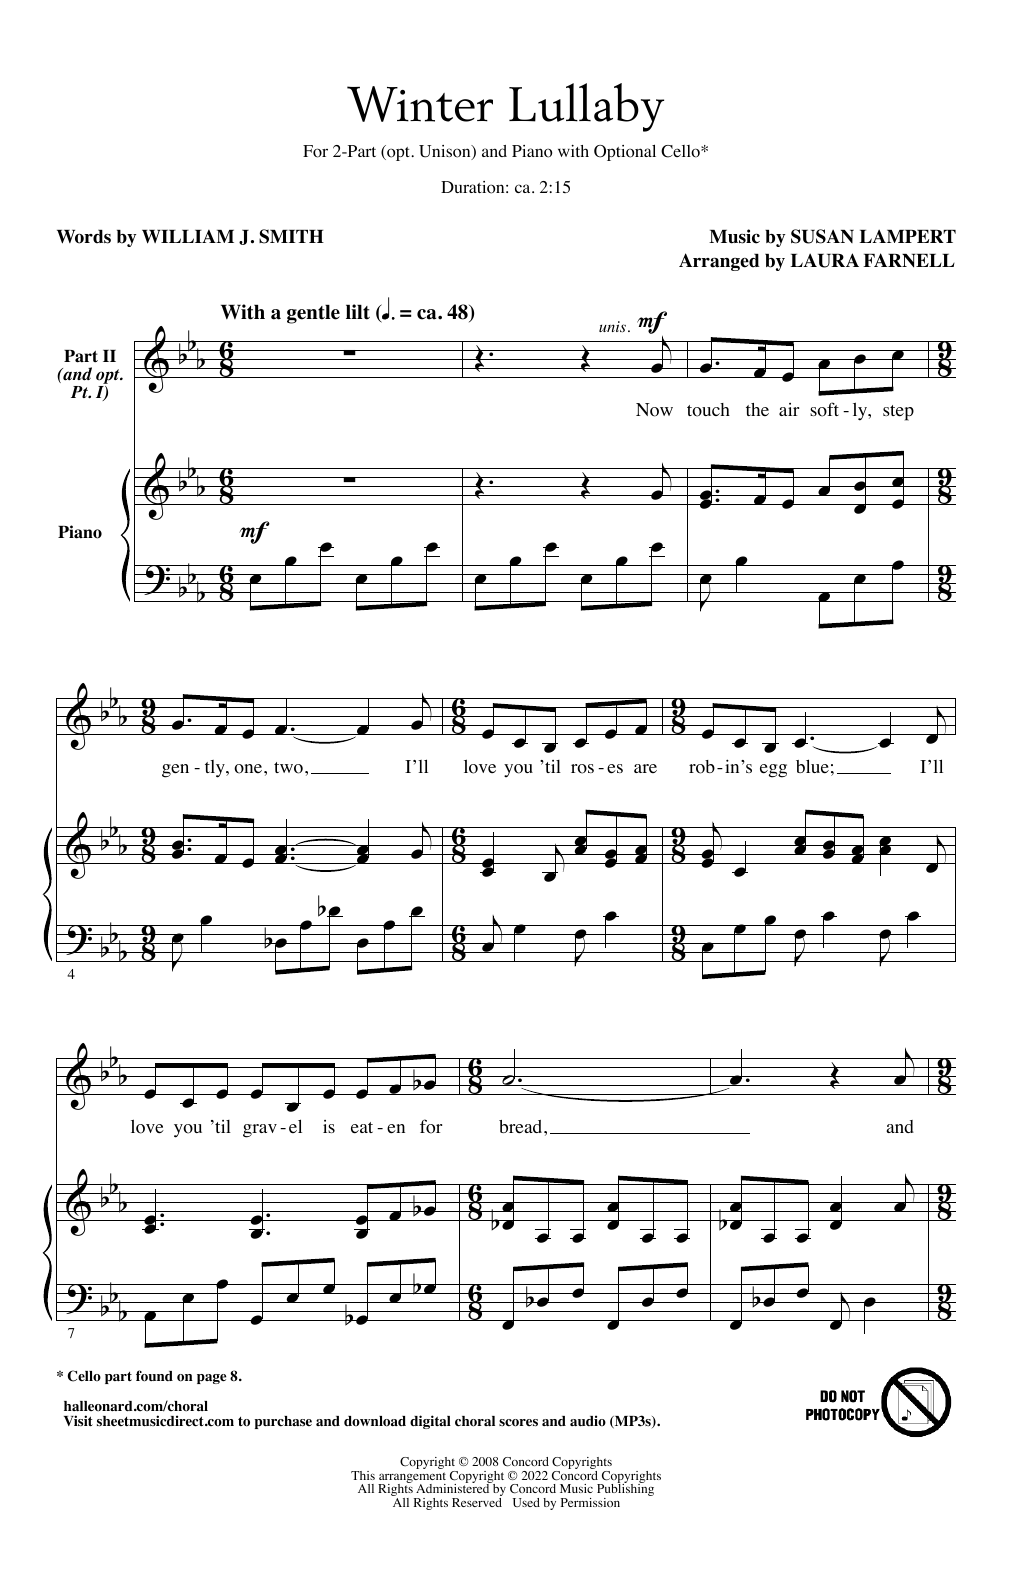 Winter Lullaby (arr. Laura Farnell) (2-Part Choir) von William J. Smith and Susan Lampert